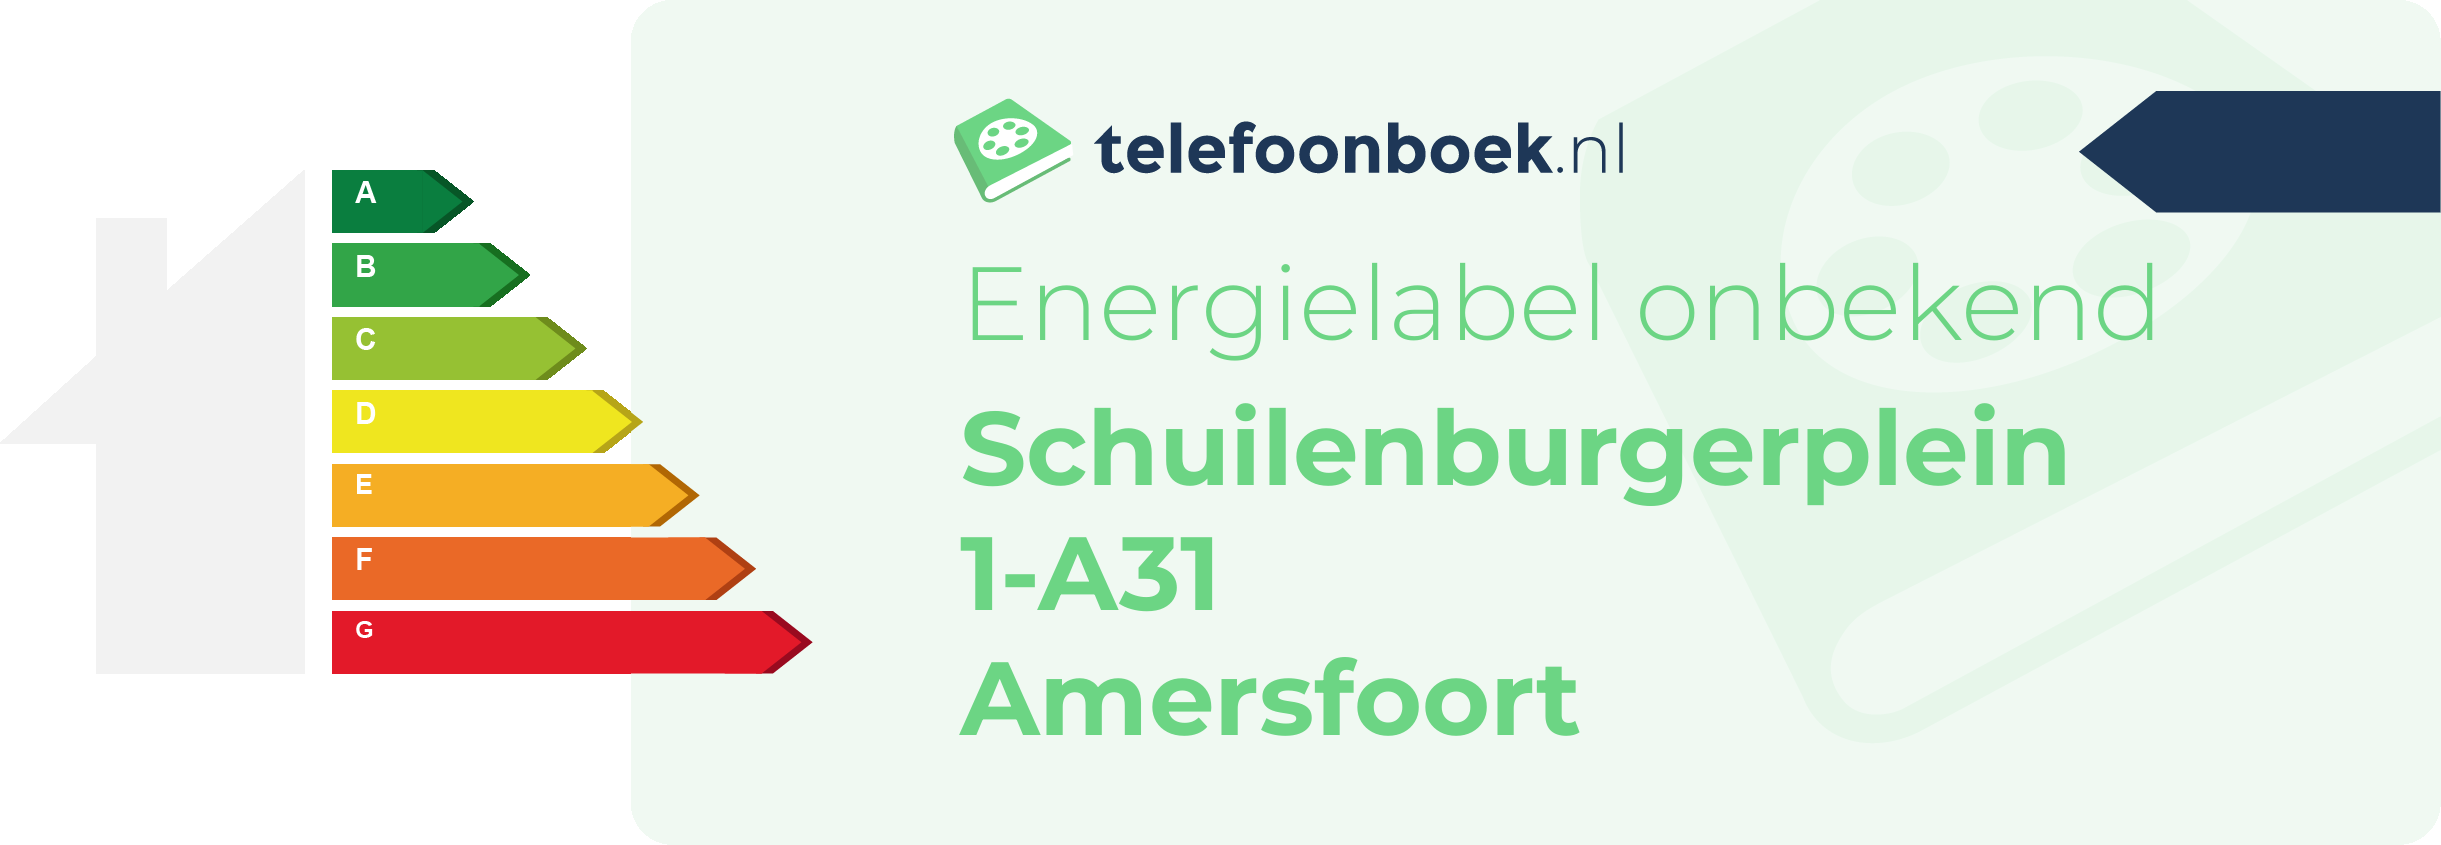 Energielabel Schuilenburgerplein 1-A31 Amersfoort